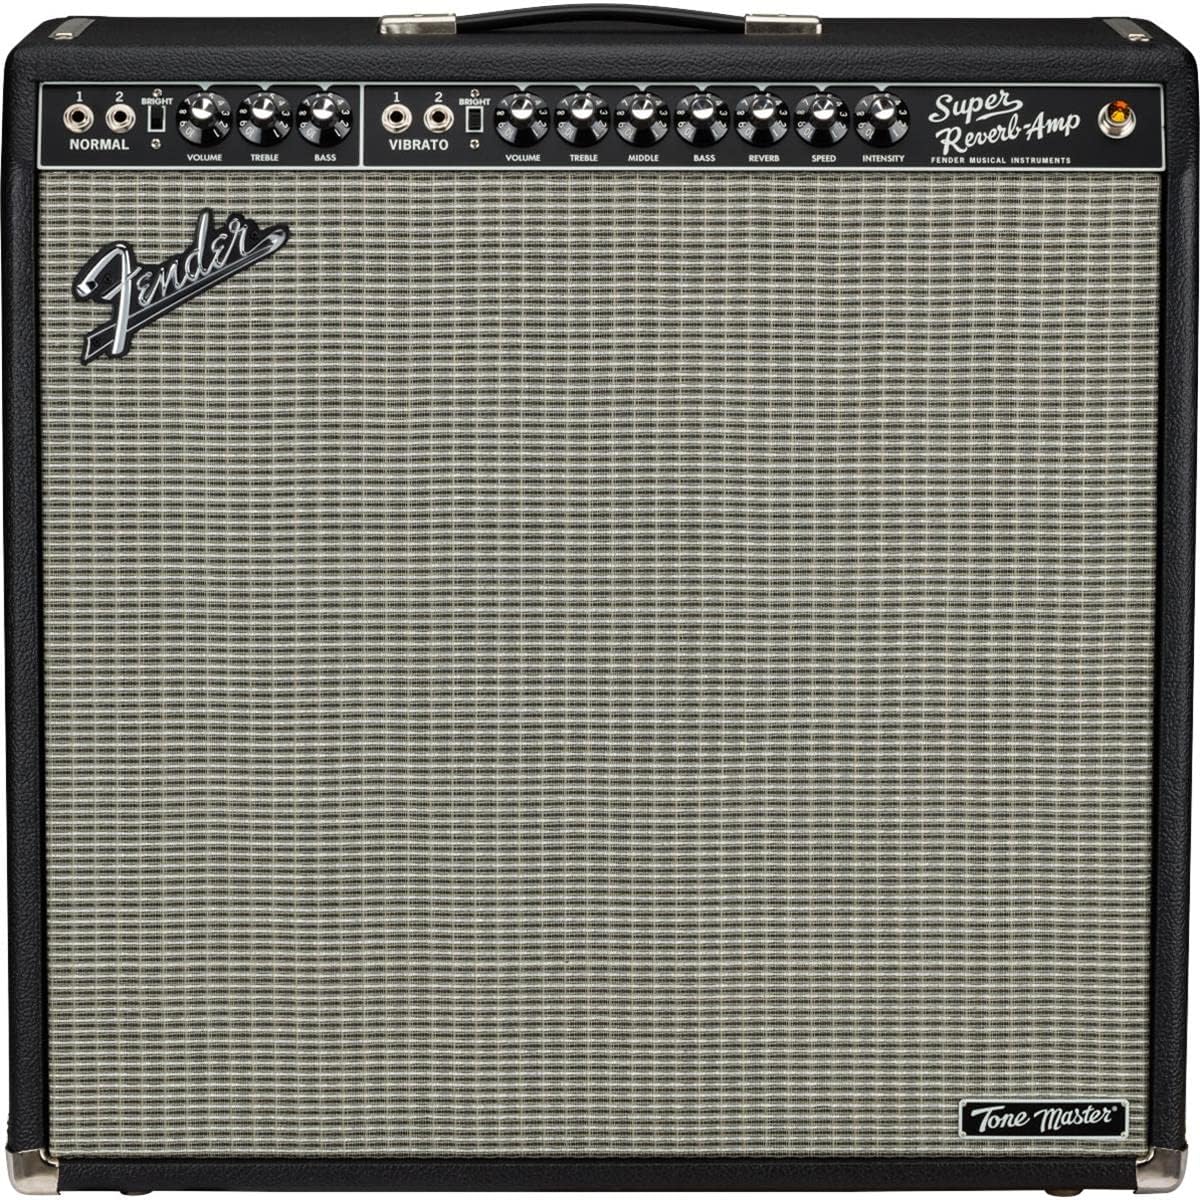 Amplificador Fender Tone Master Super Reverb 120v